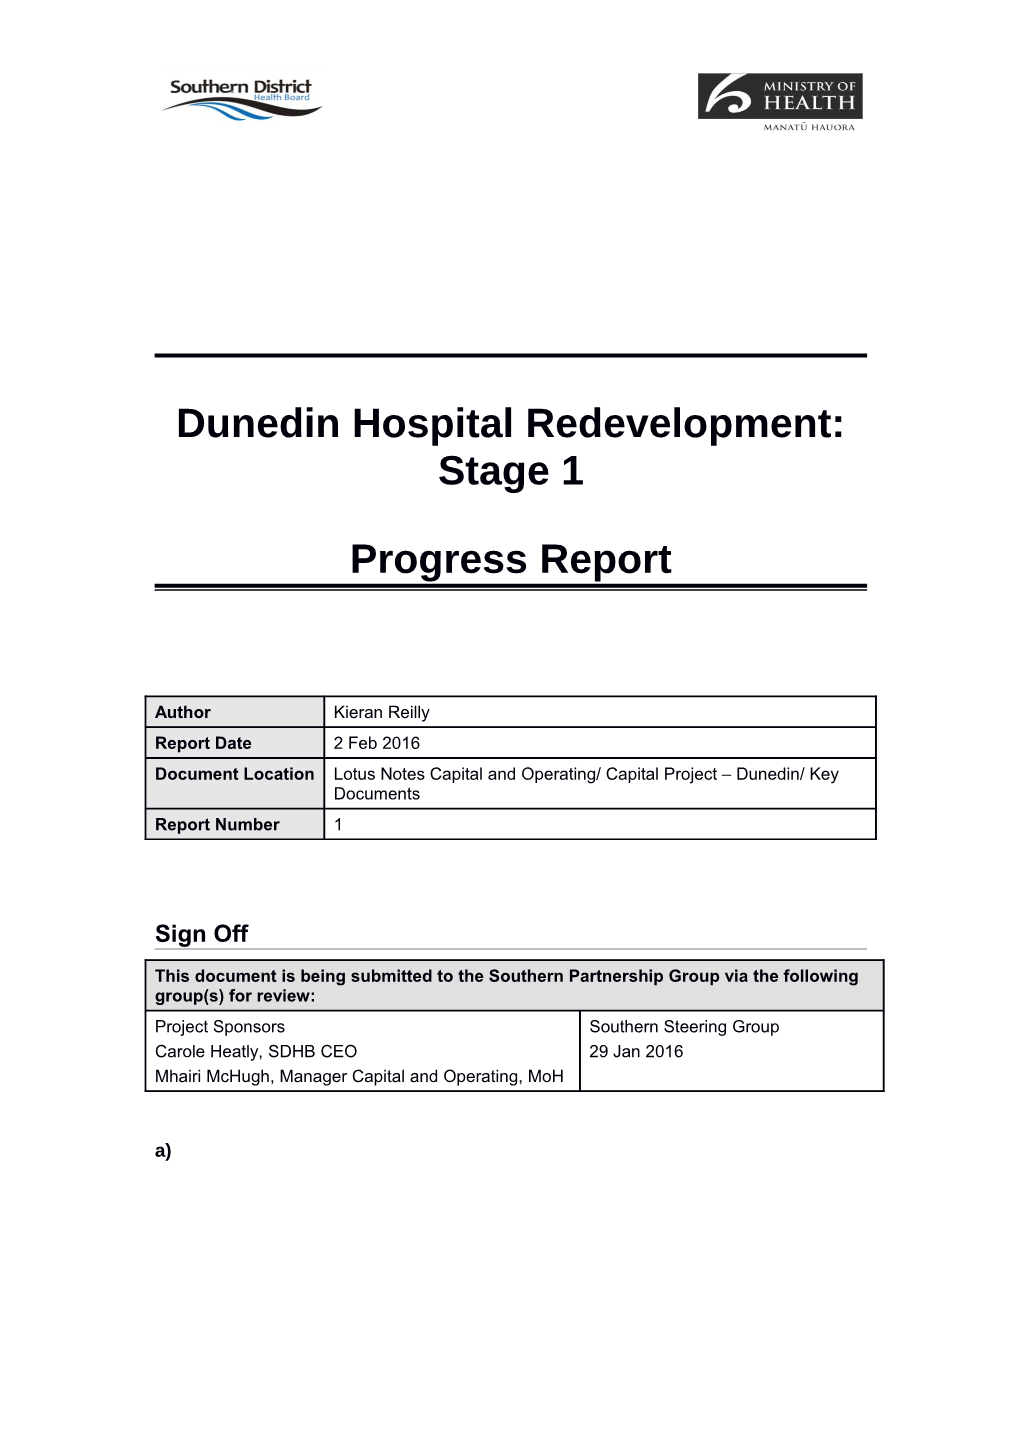 Dunedin Hospital Redevelopment: Stage 1 Progress Report - 2 Feb 2016